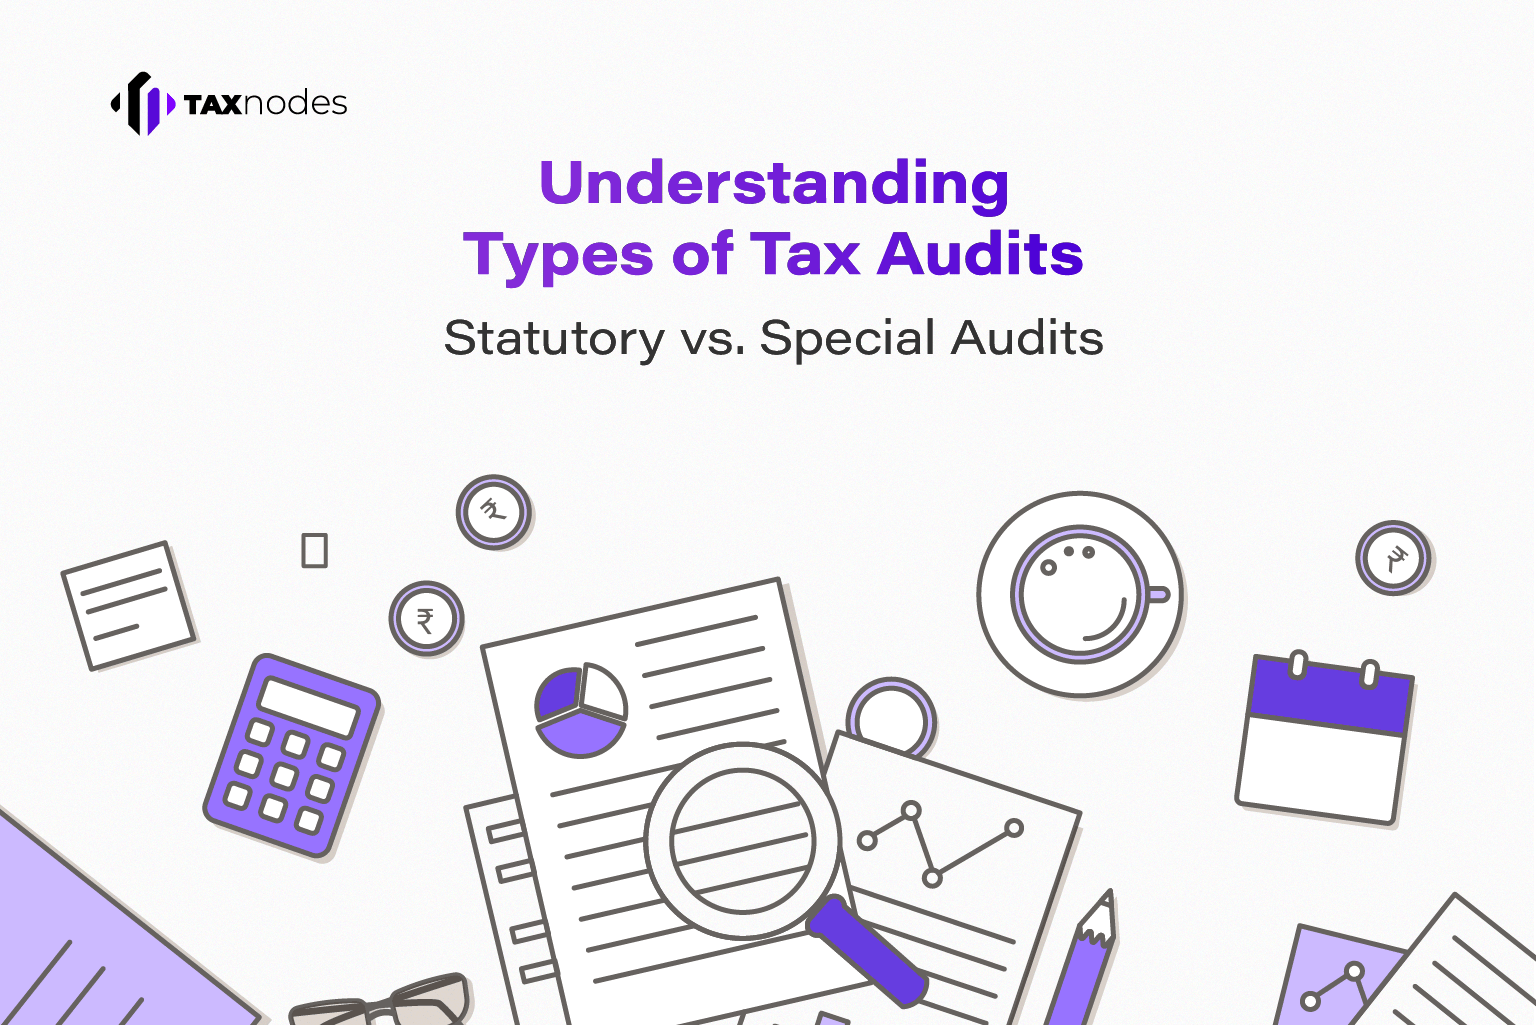 Statutory vs. Special Tax Audits 